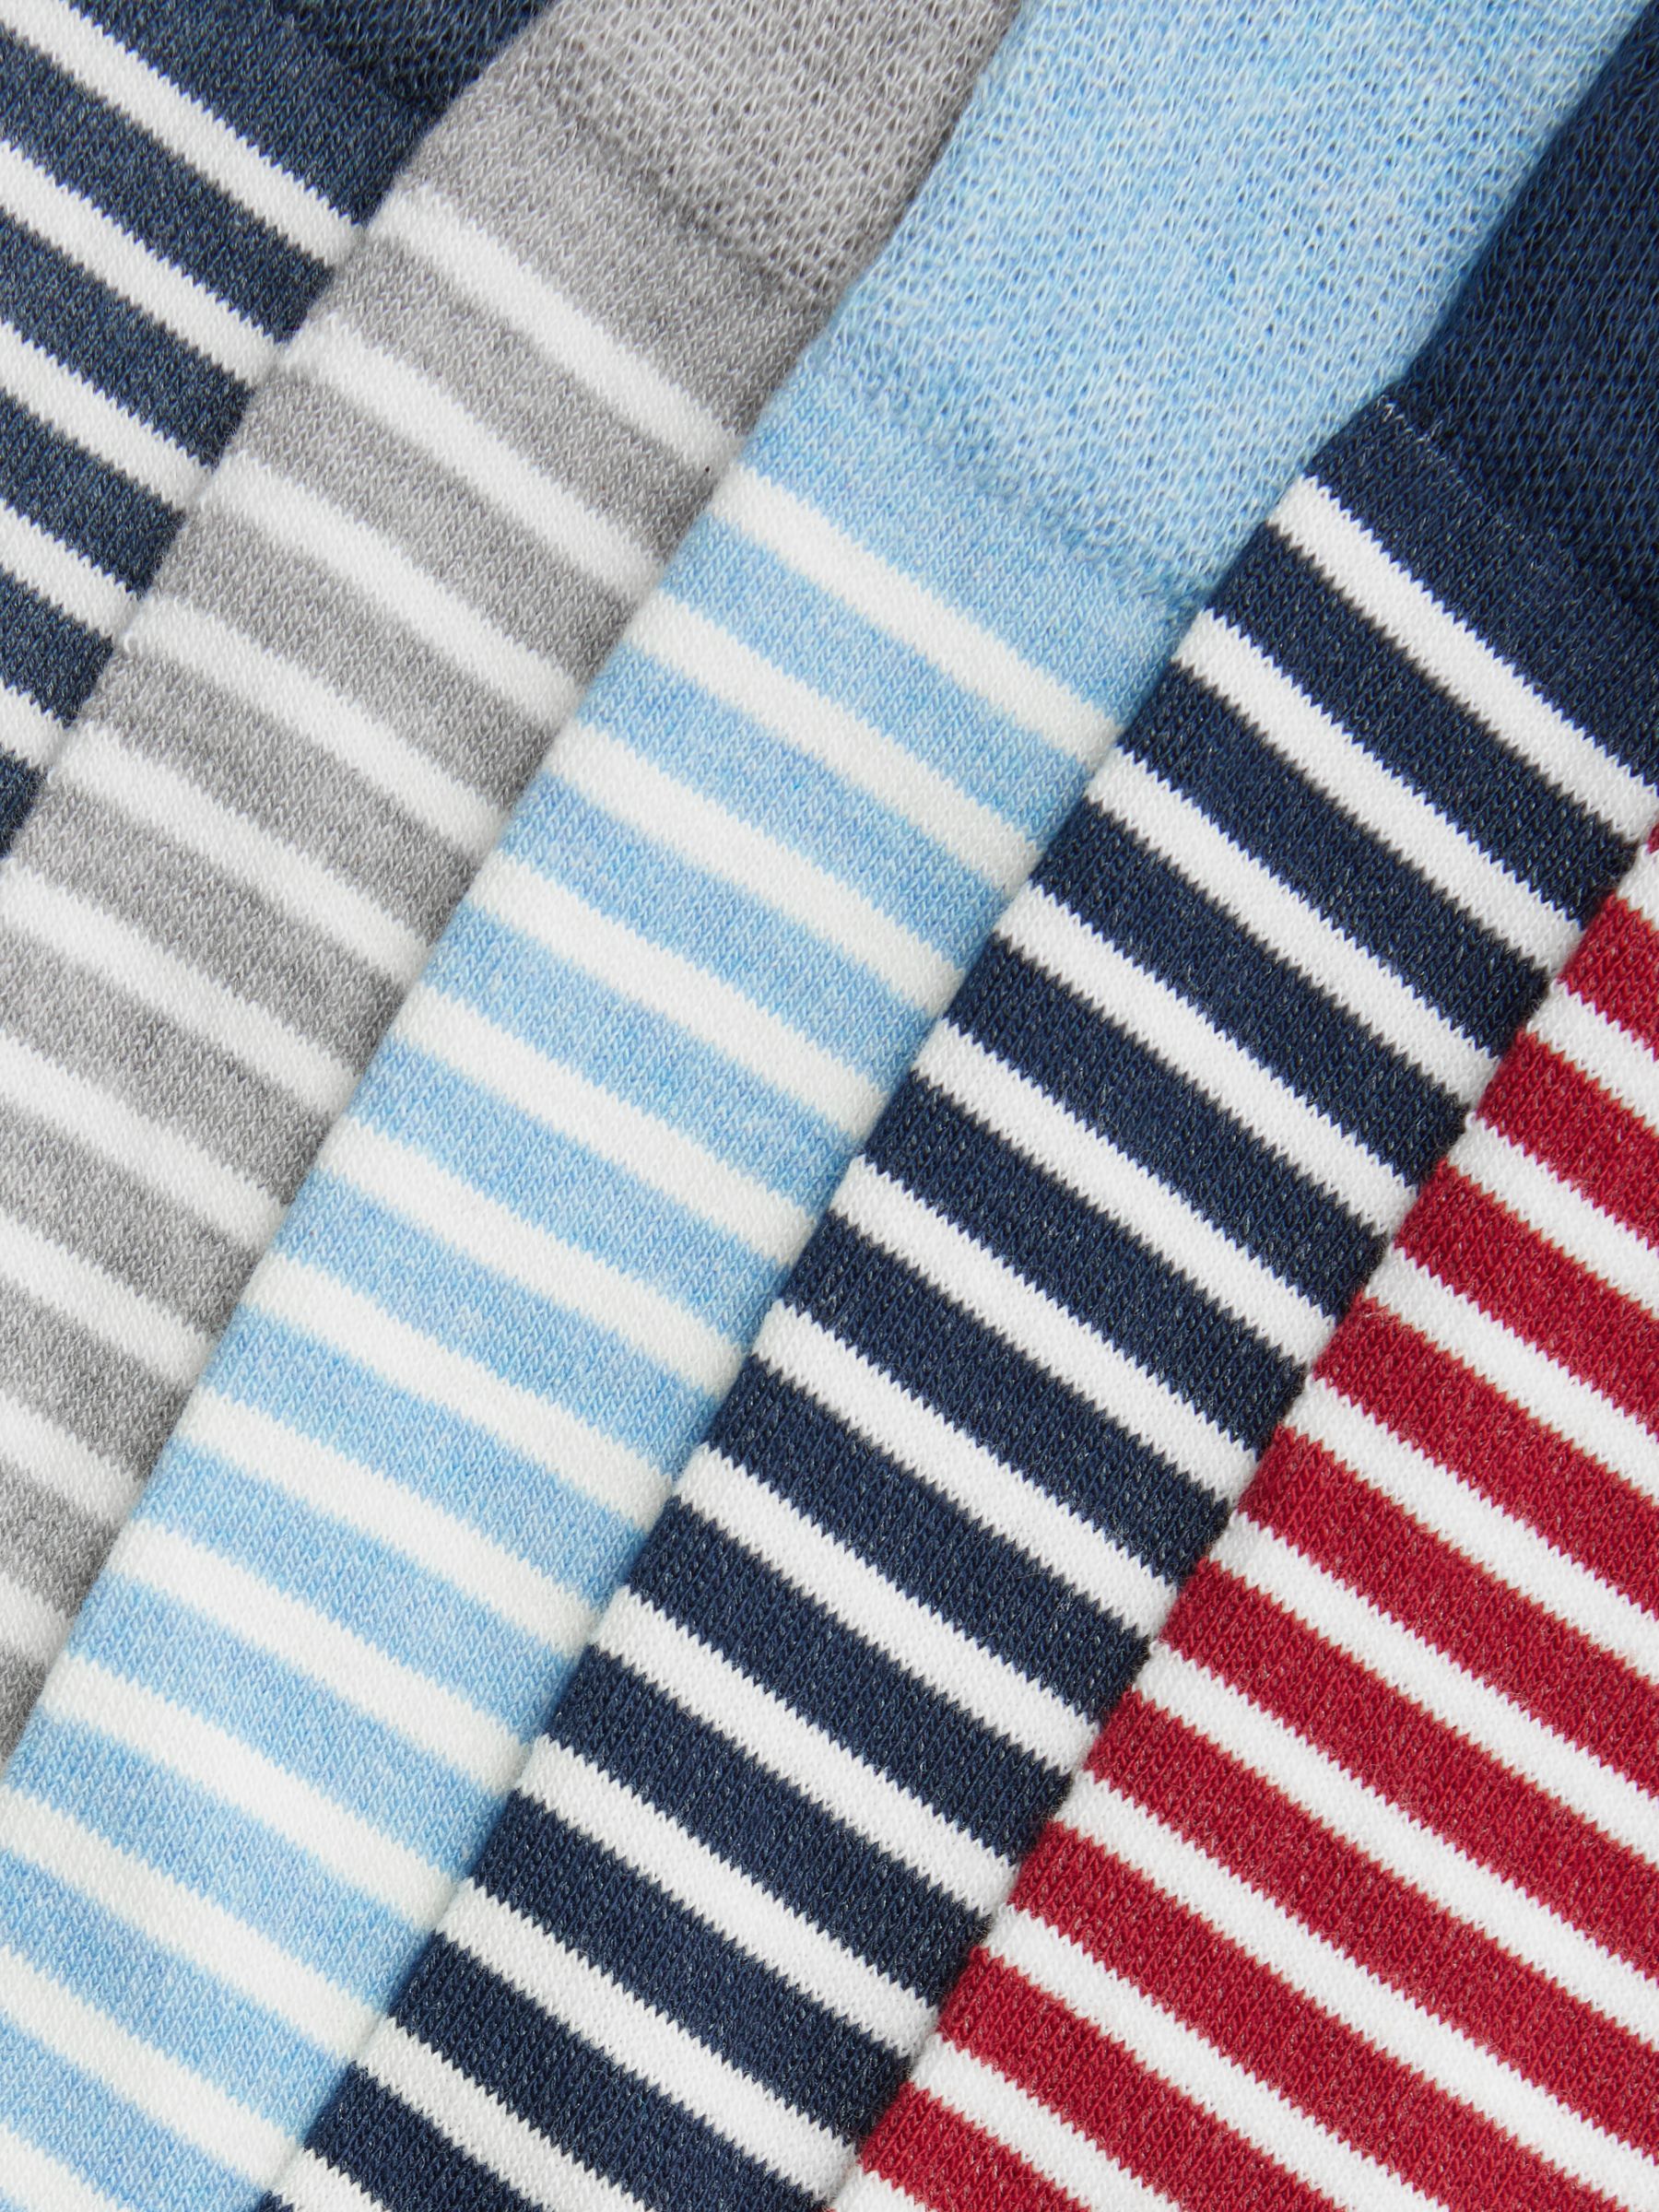 John Lewis Organic Cotton Rich Breton Stripe Men's Socks, Pack of 5, Navy/Grey/Blue/Black/Red, S